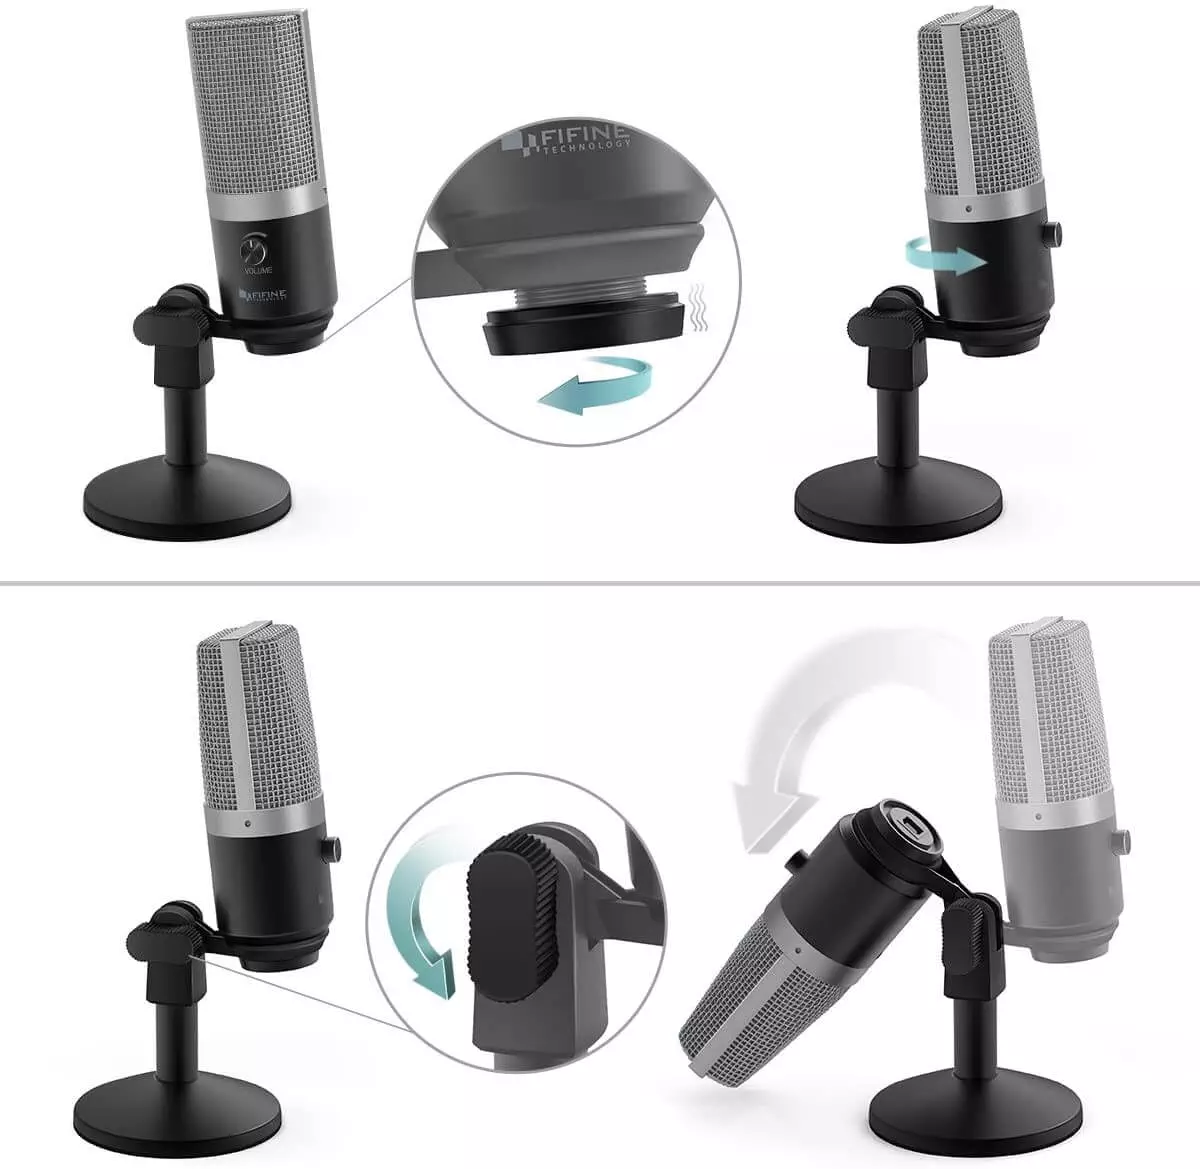 FIFINE K670 USB Unidirectional Condenser Microphone adjust